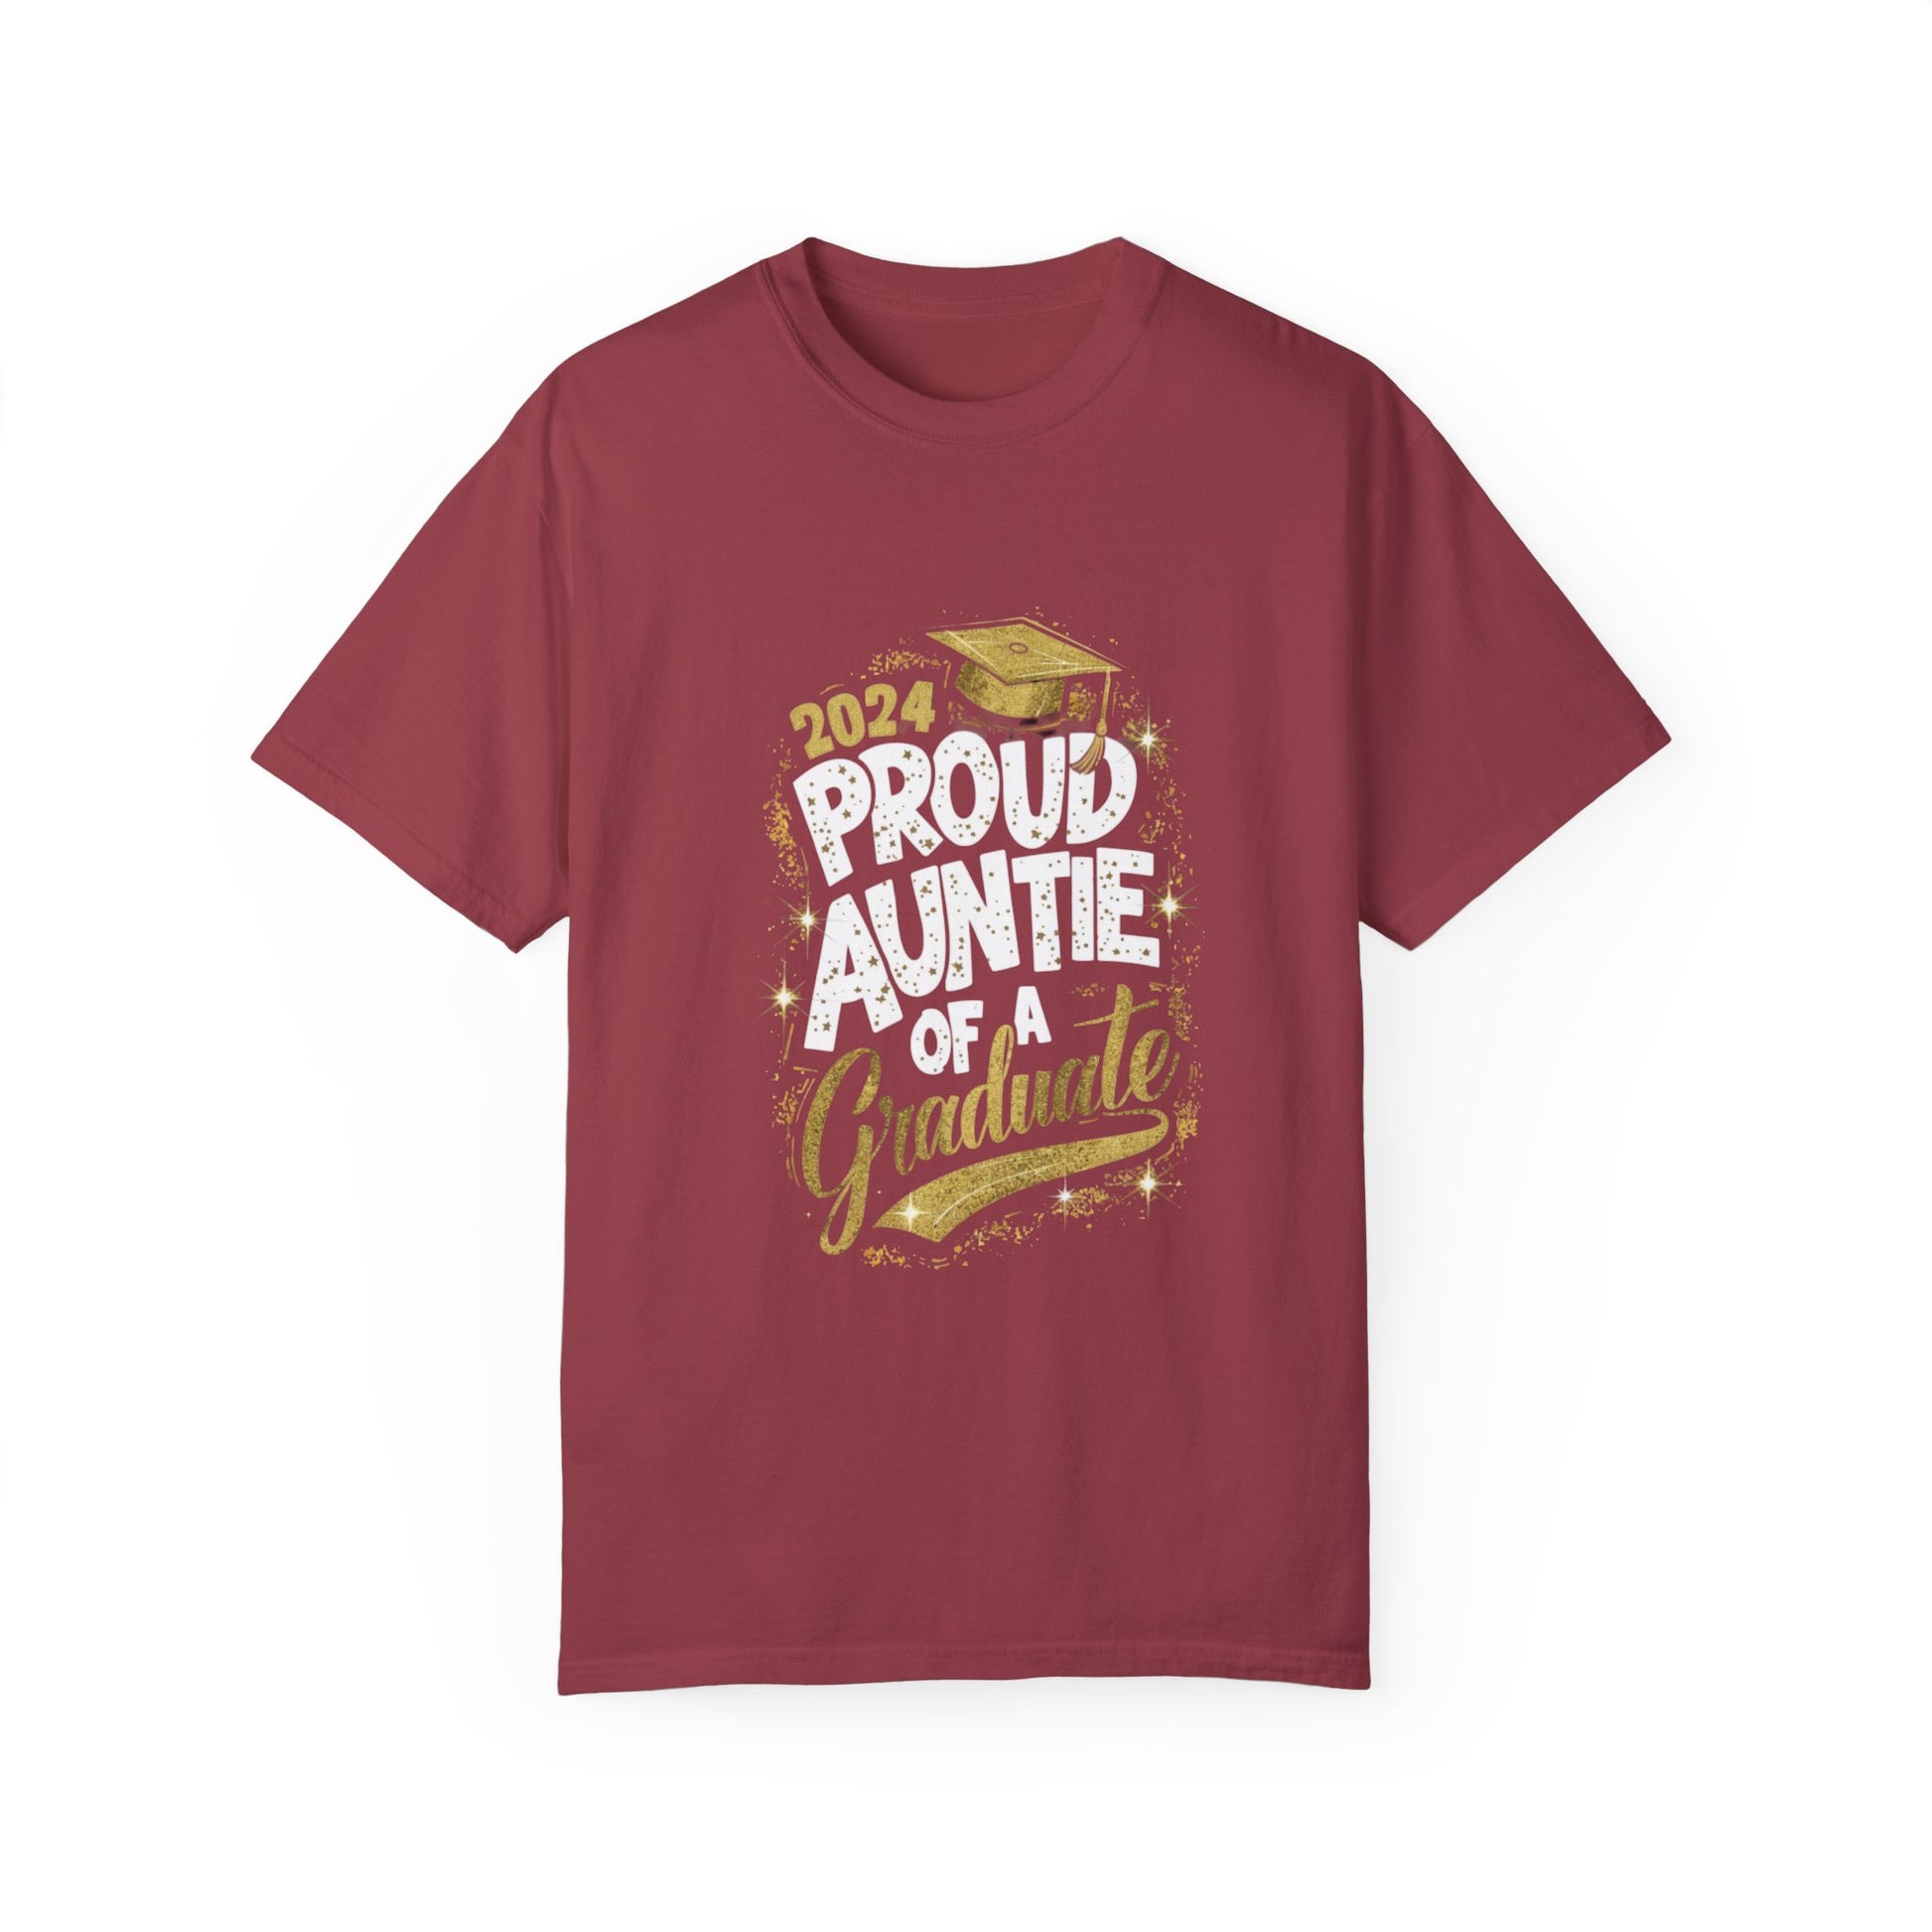 Proud Auntie of a 2024 Graduate Unisex Garment-dyed T-shirt Cotton Funny Humorous Graphic Soft Premium Unisex Men Women Chili T-shirt Birthday Gift-7